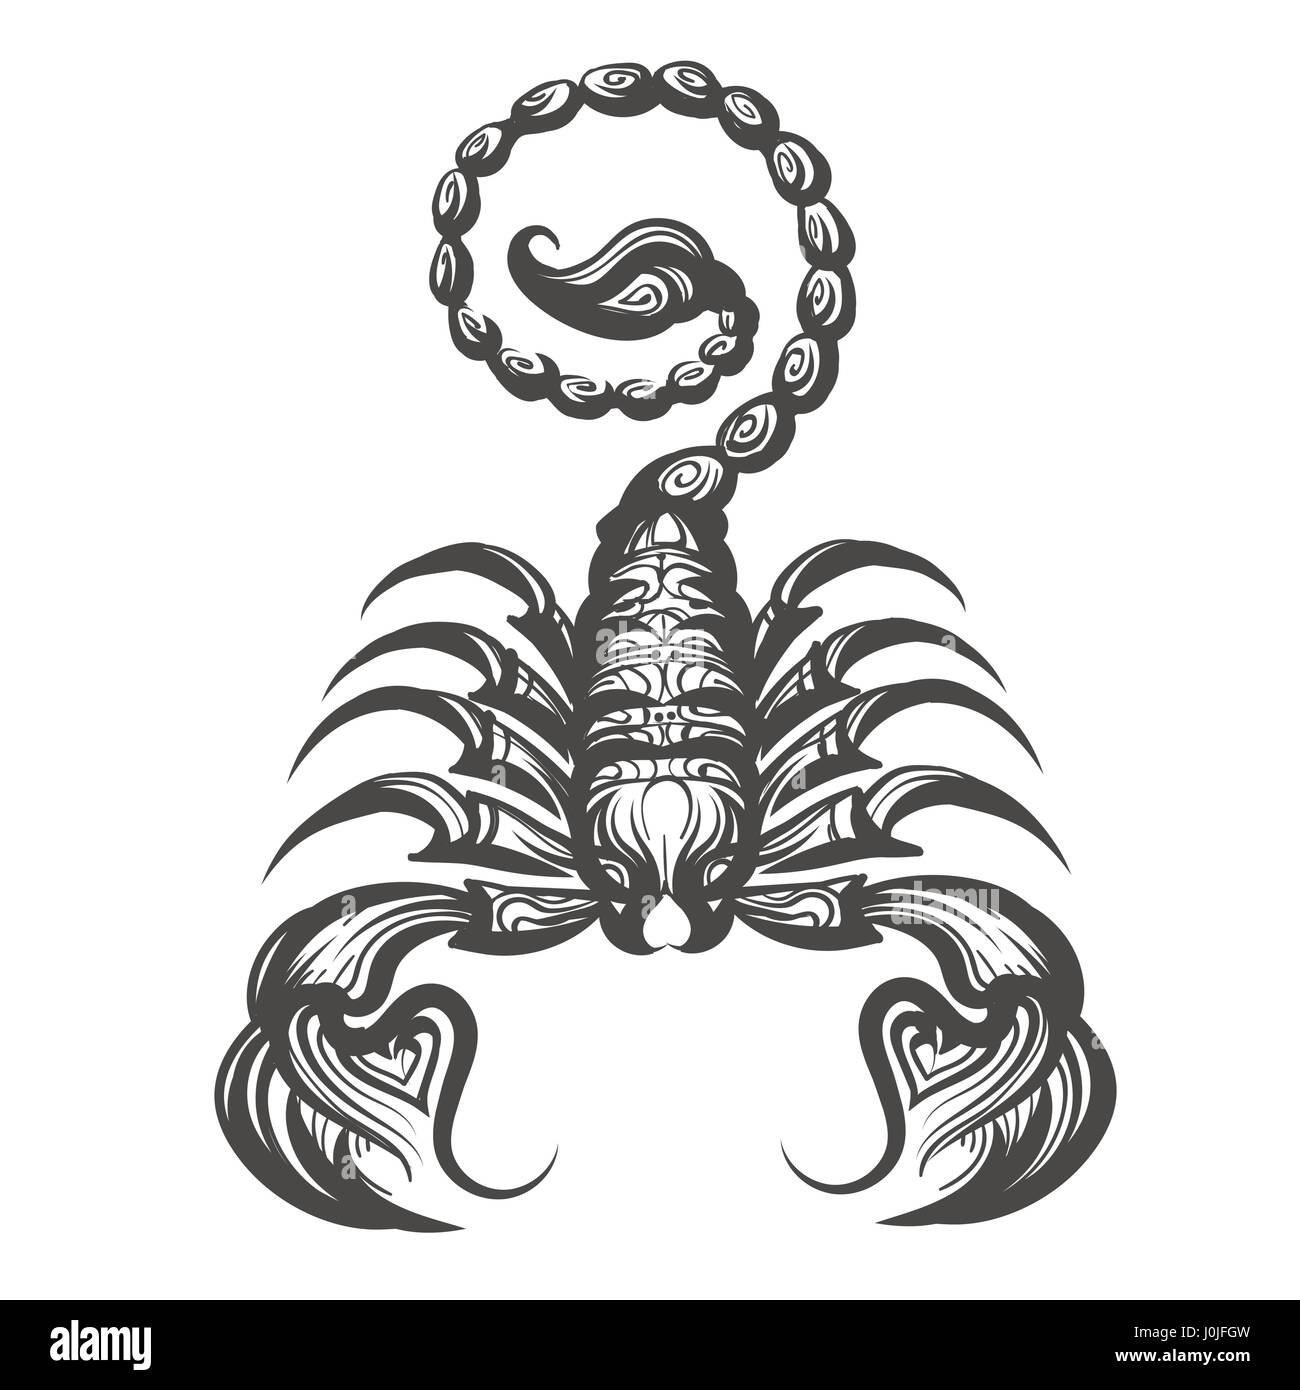 Scorpions dessin